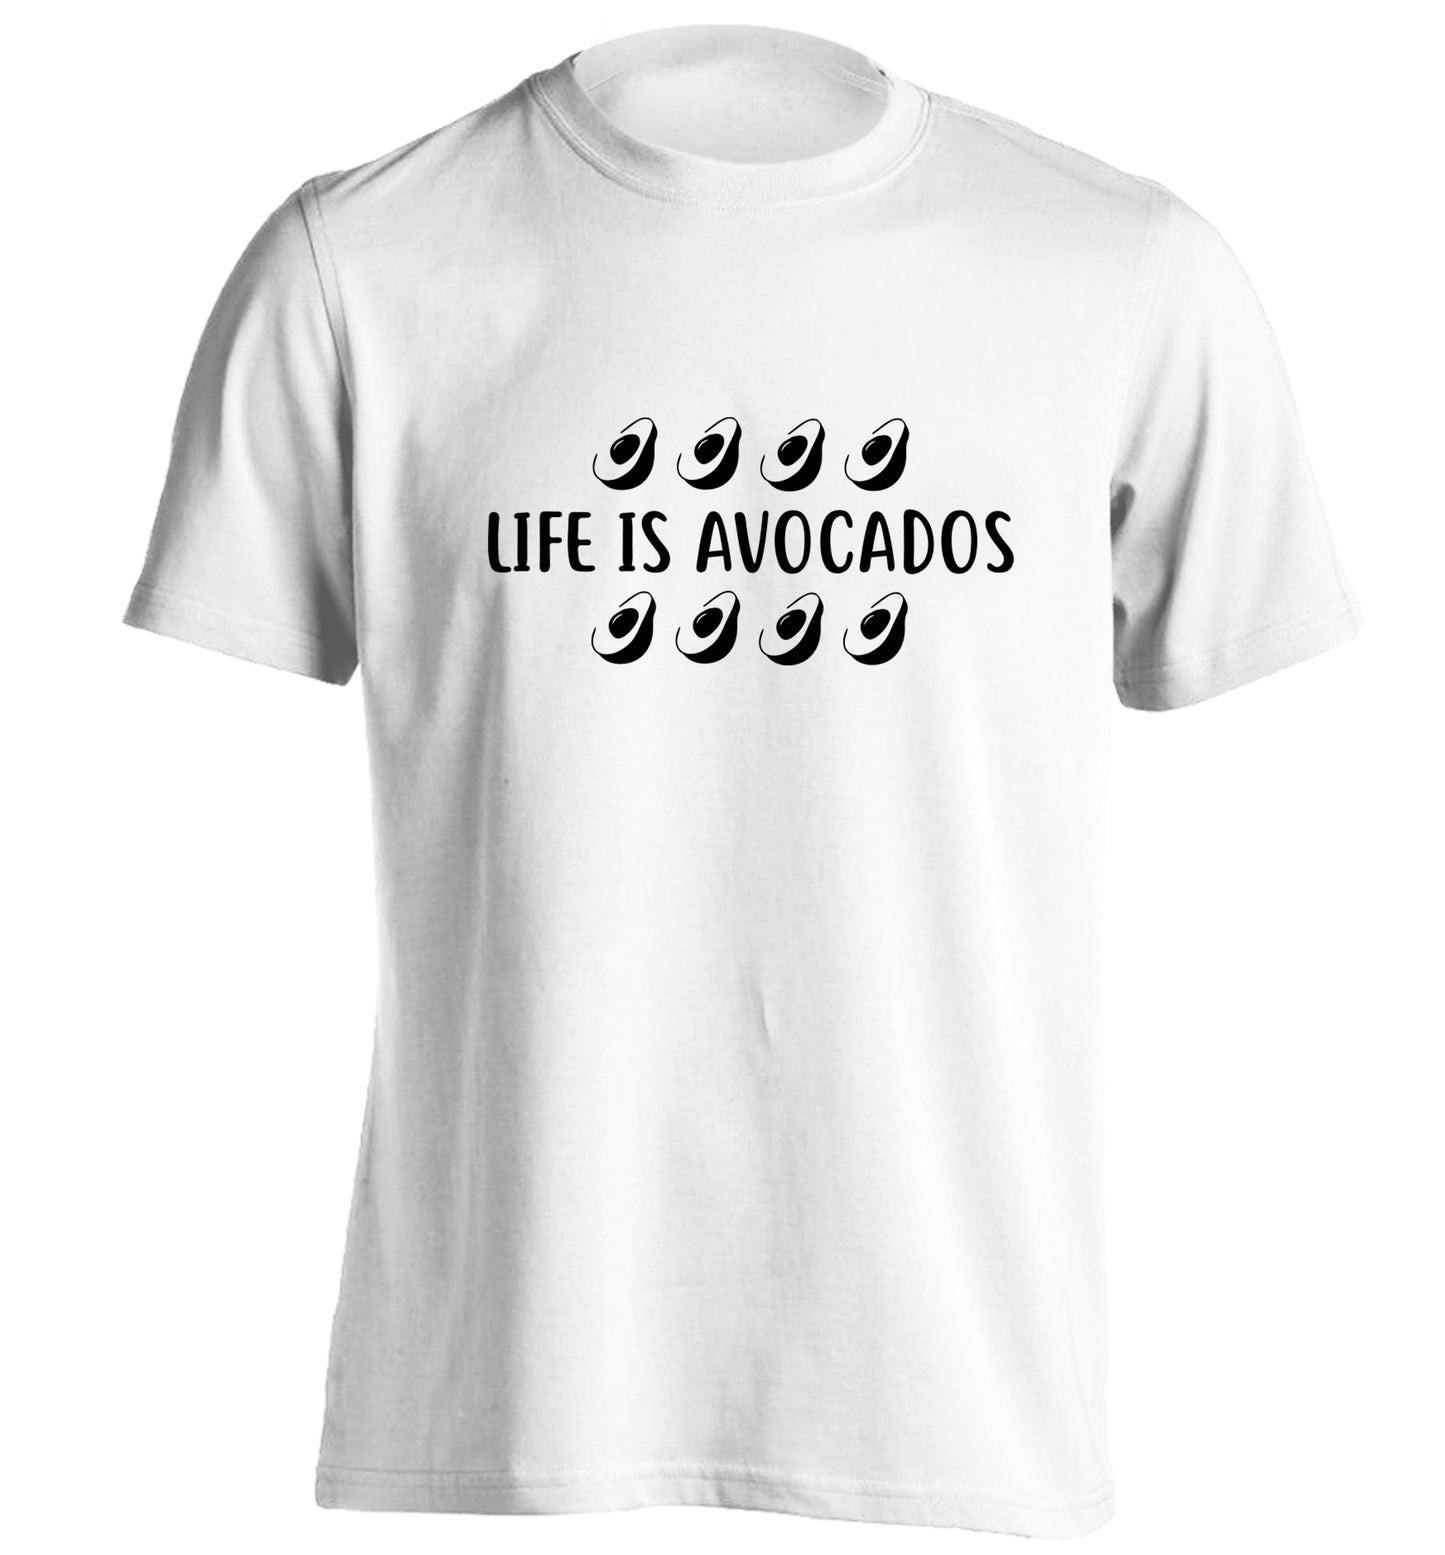 Life is avocados adults unisex white Tshirt 2XL